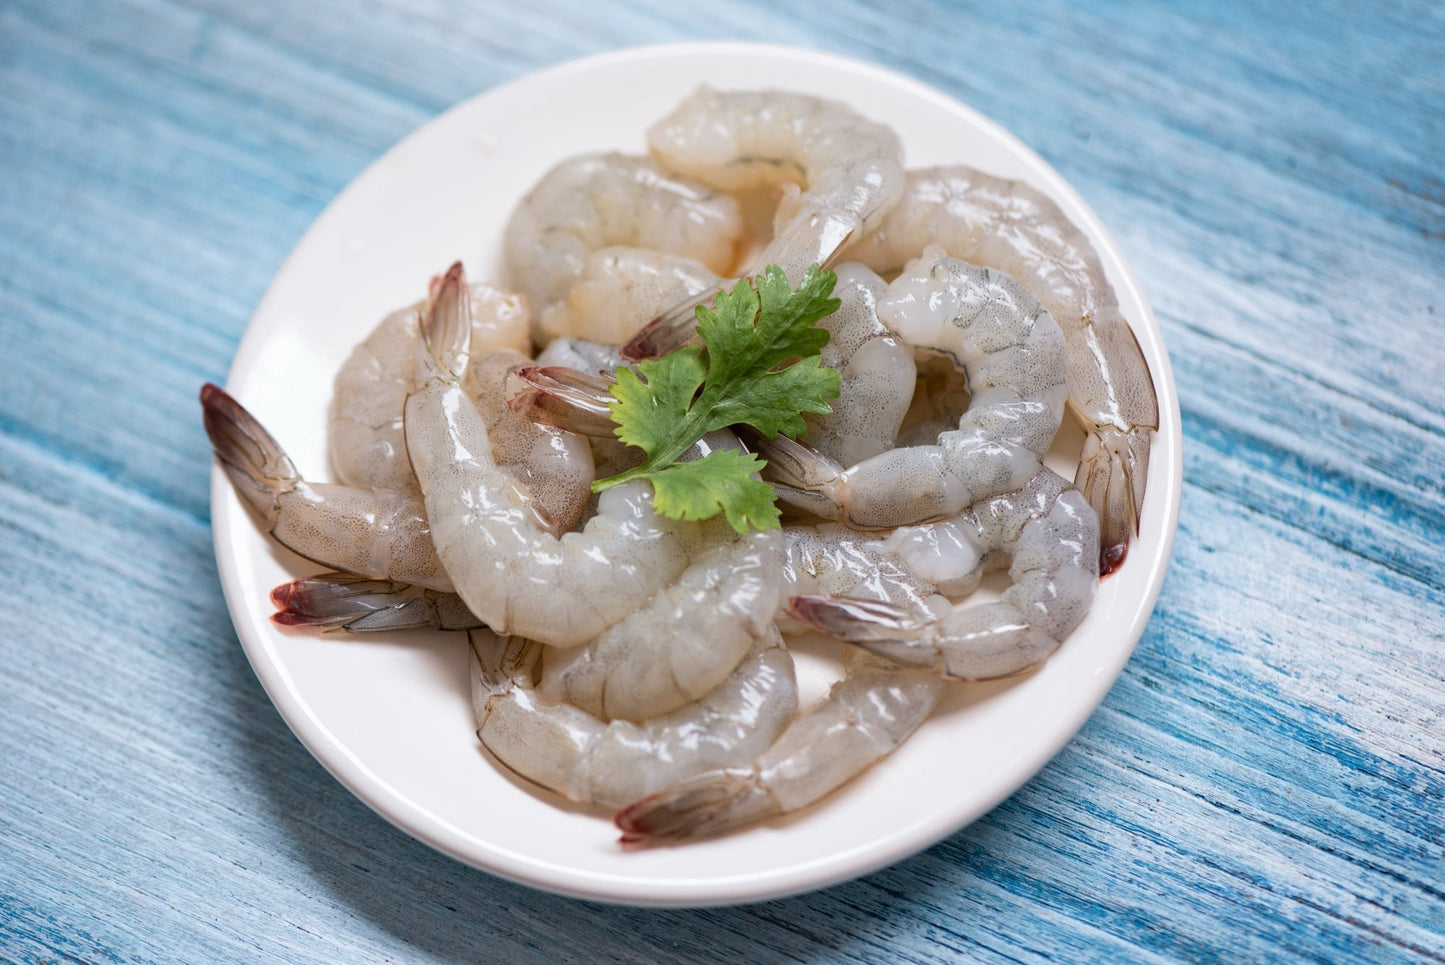 Alaskan Halibut 2 lbs And Gourmet White Shrimp 4 lbs